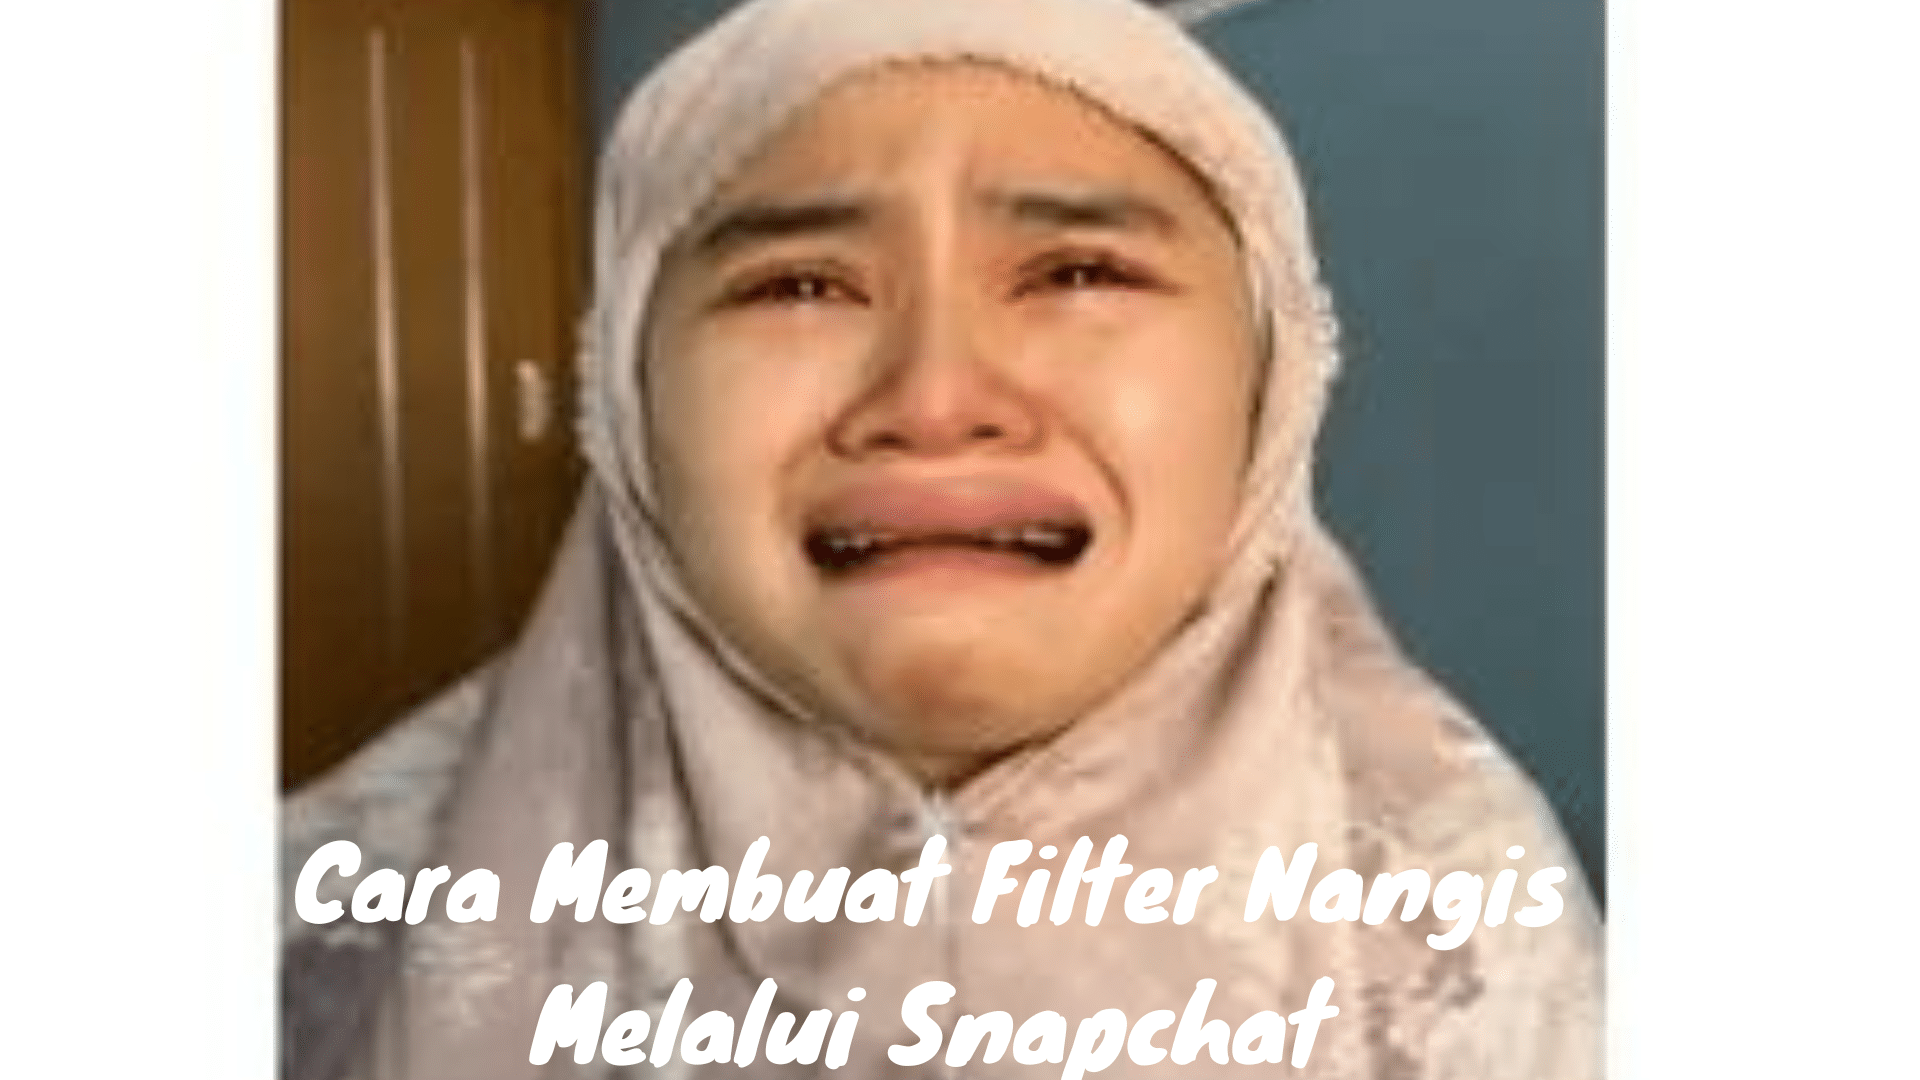 How To Make A Tiktok Crying Filter Through Snapchat